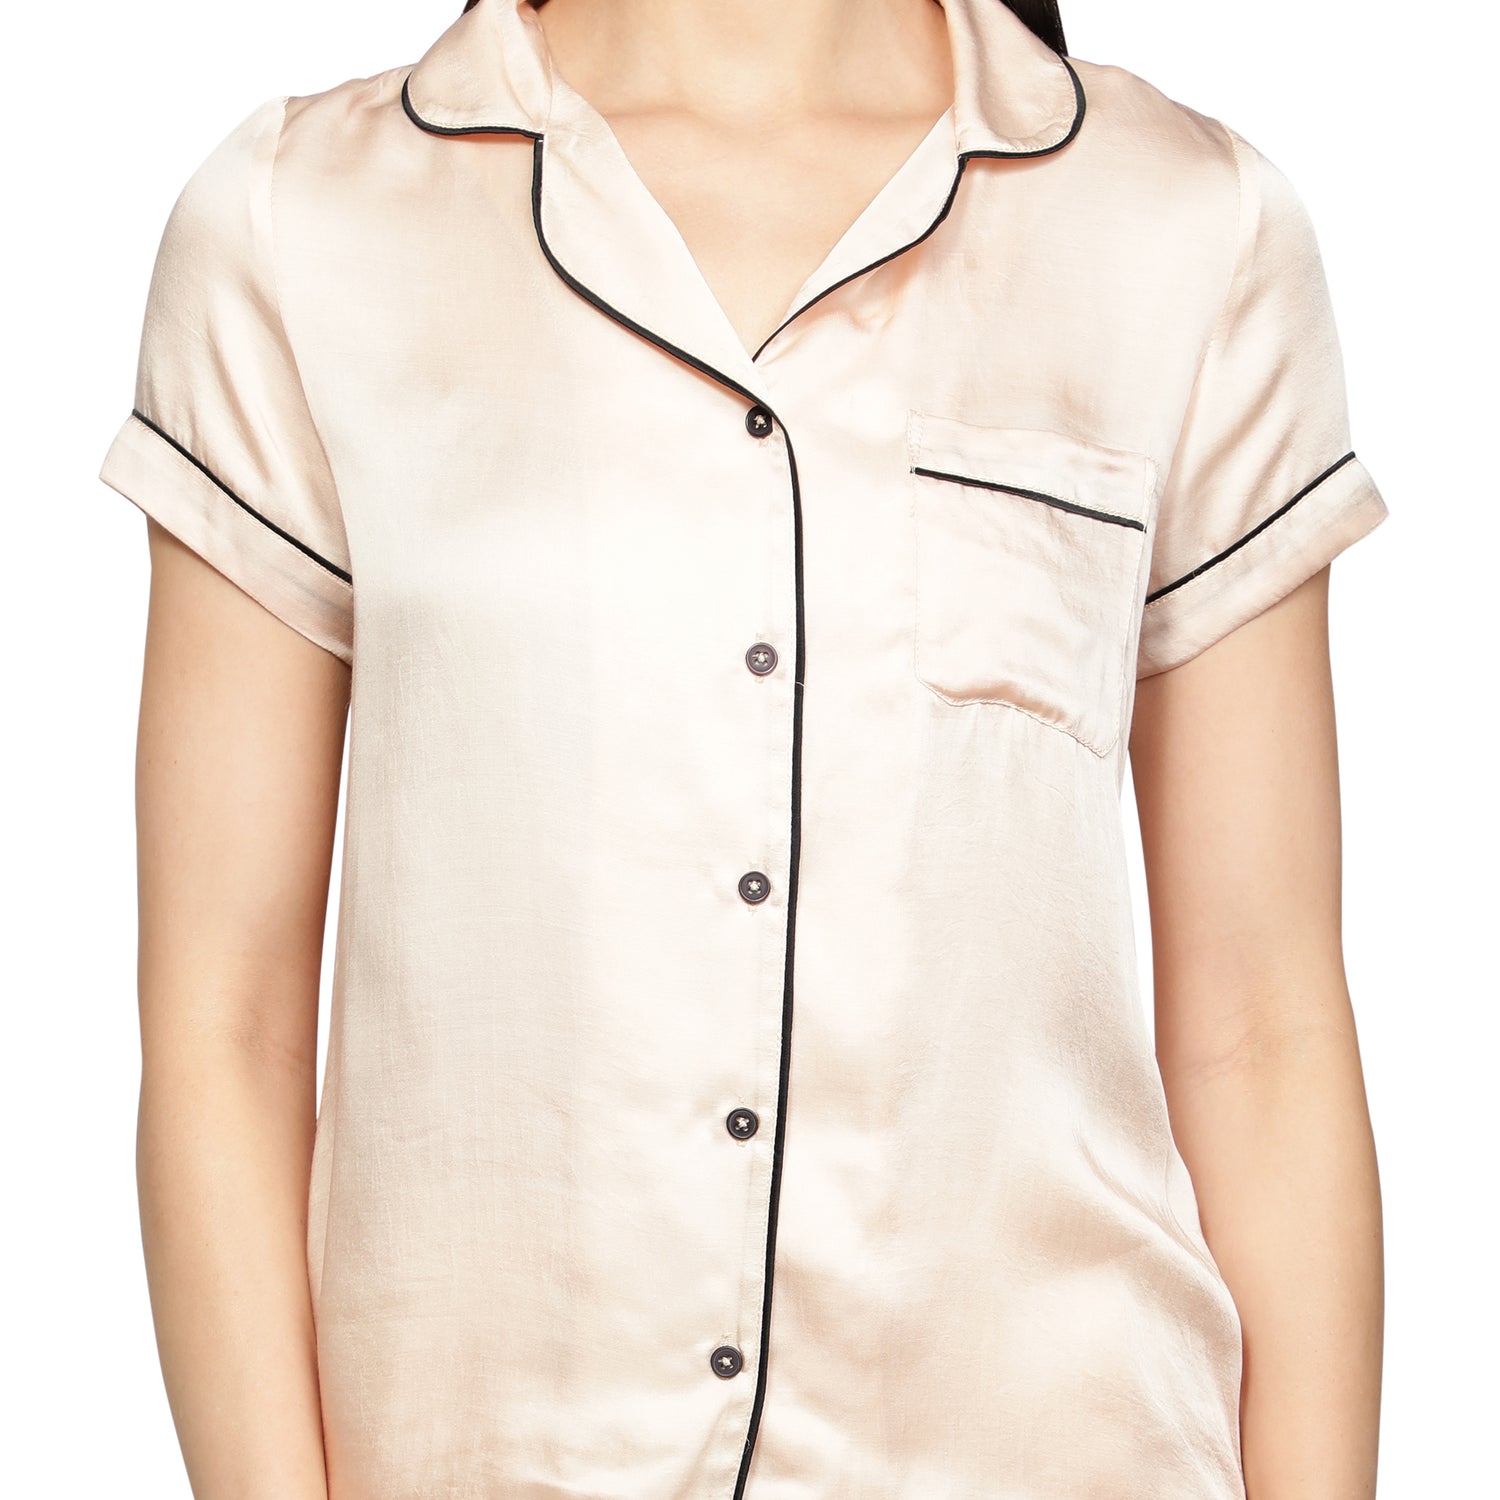 SLAY. Women's Nightwear Nude color Half Sleeve Button Up Shirt